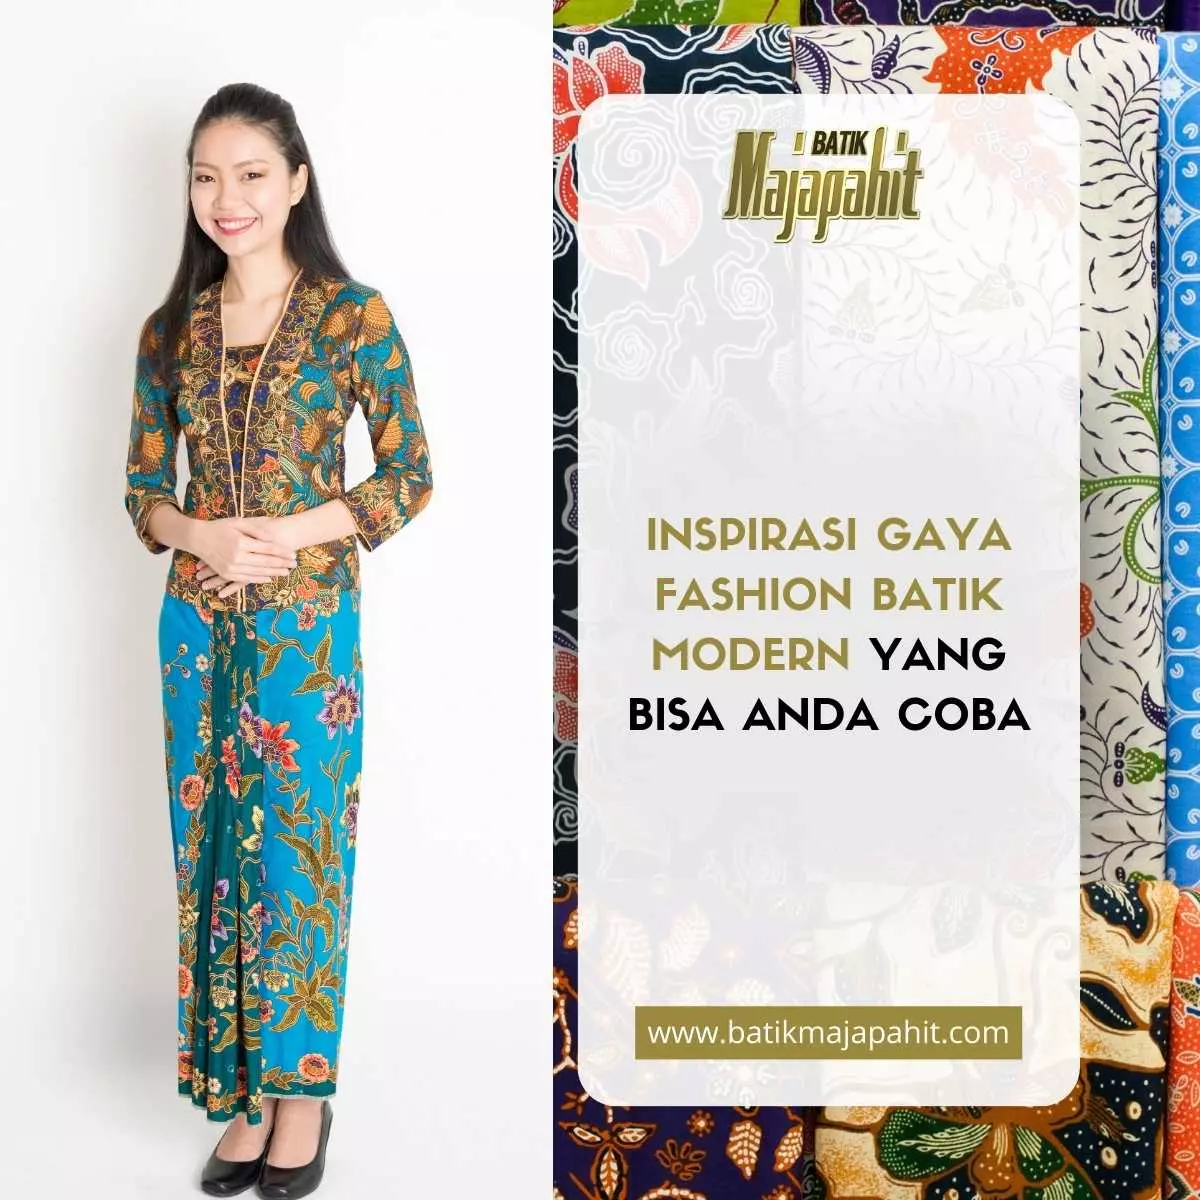 Inspirasi Gaya Fashion Batik Modern yang Bisa Anda Coba